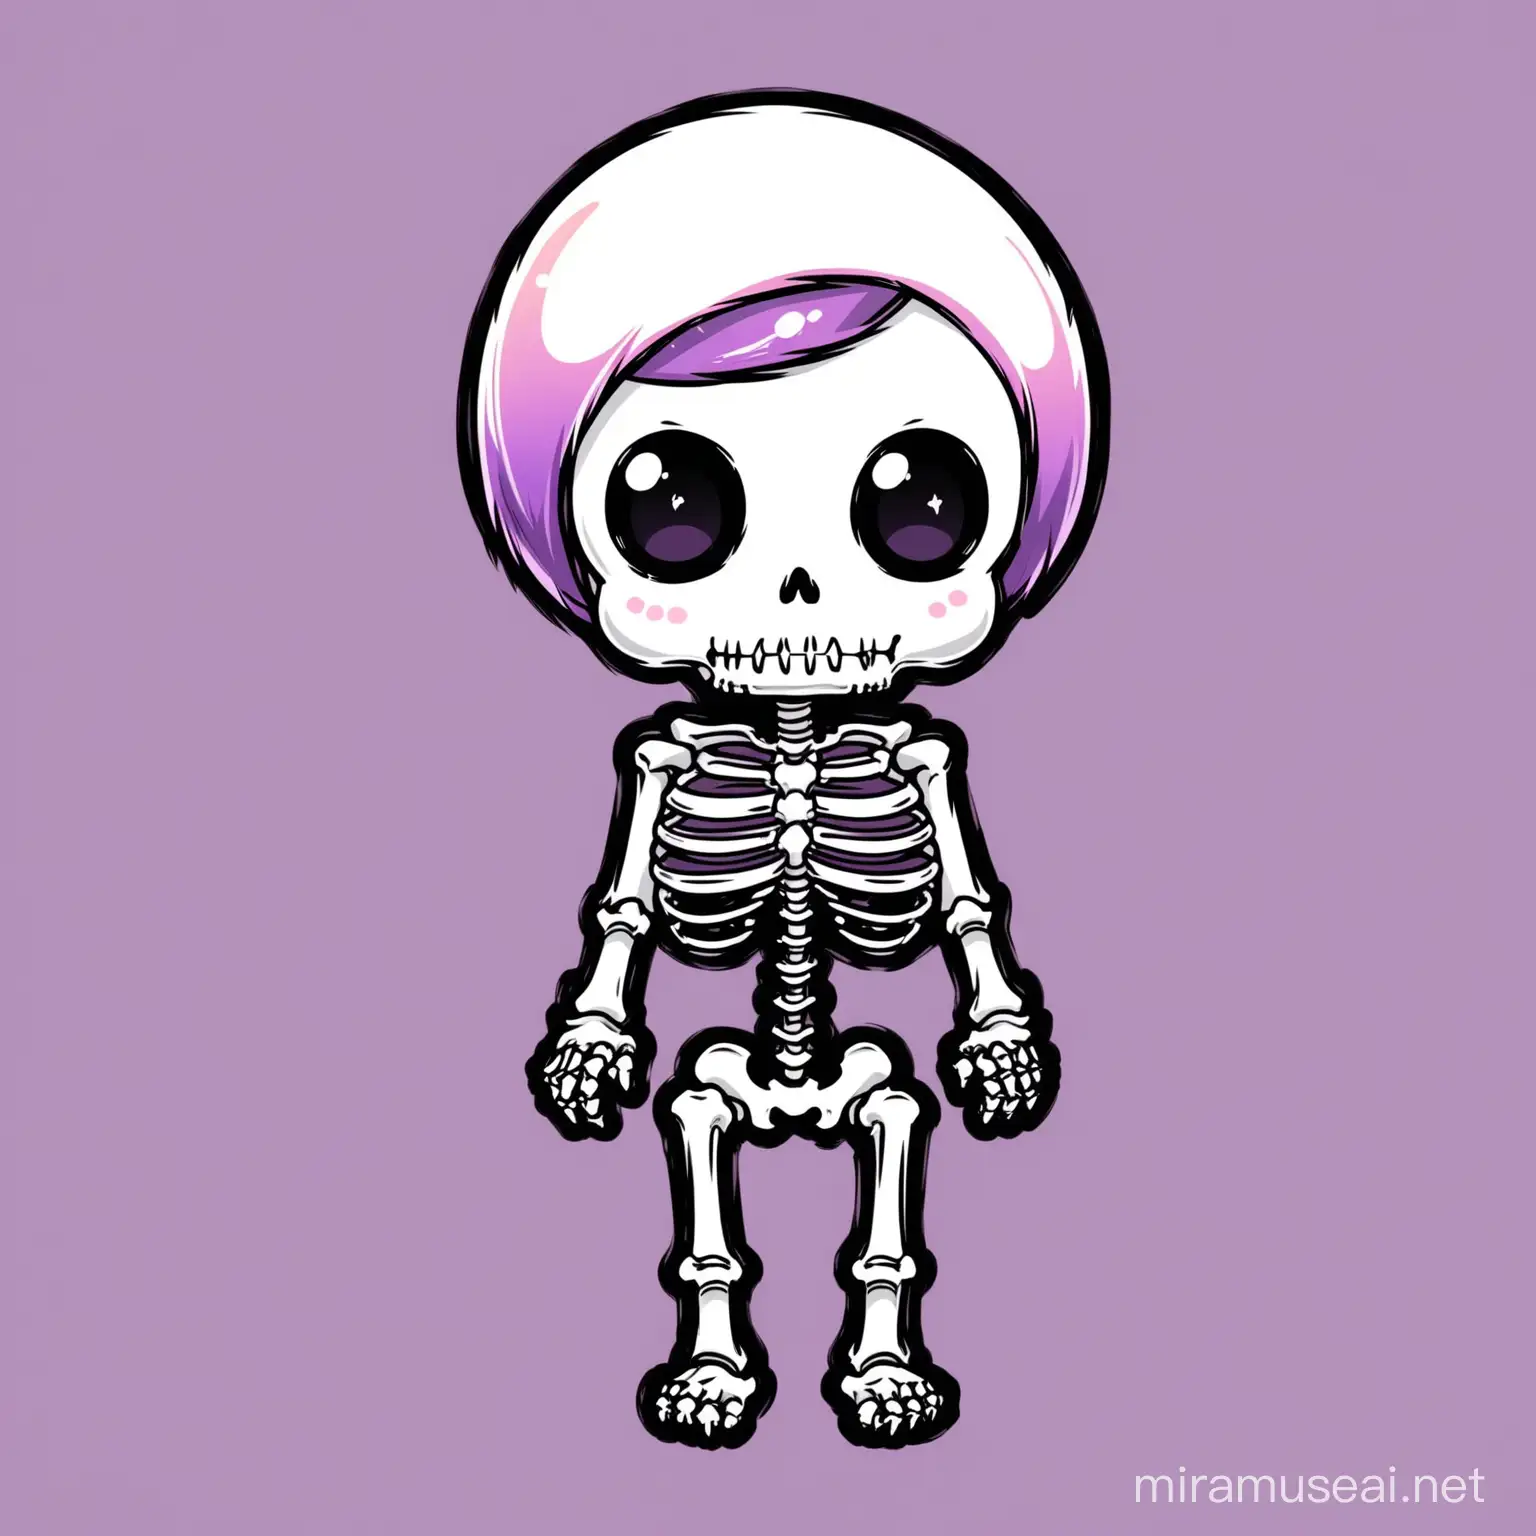 shiny anime skeleton, kawaii. E boy aesthetic, peeker decal